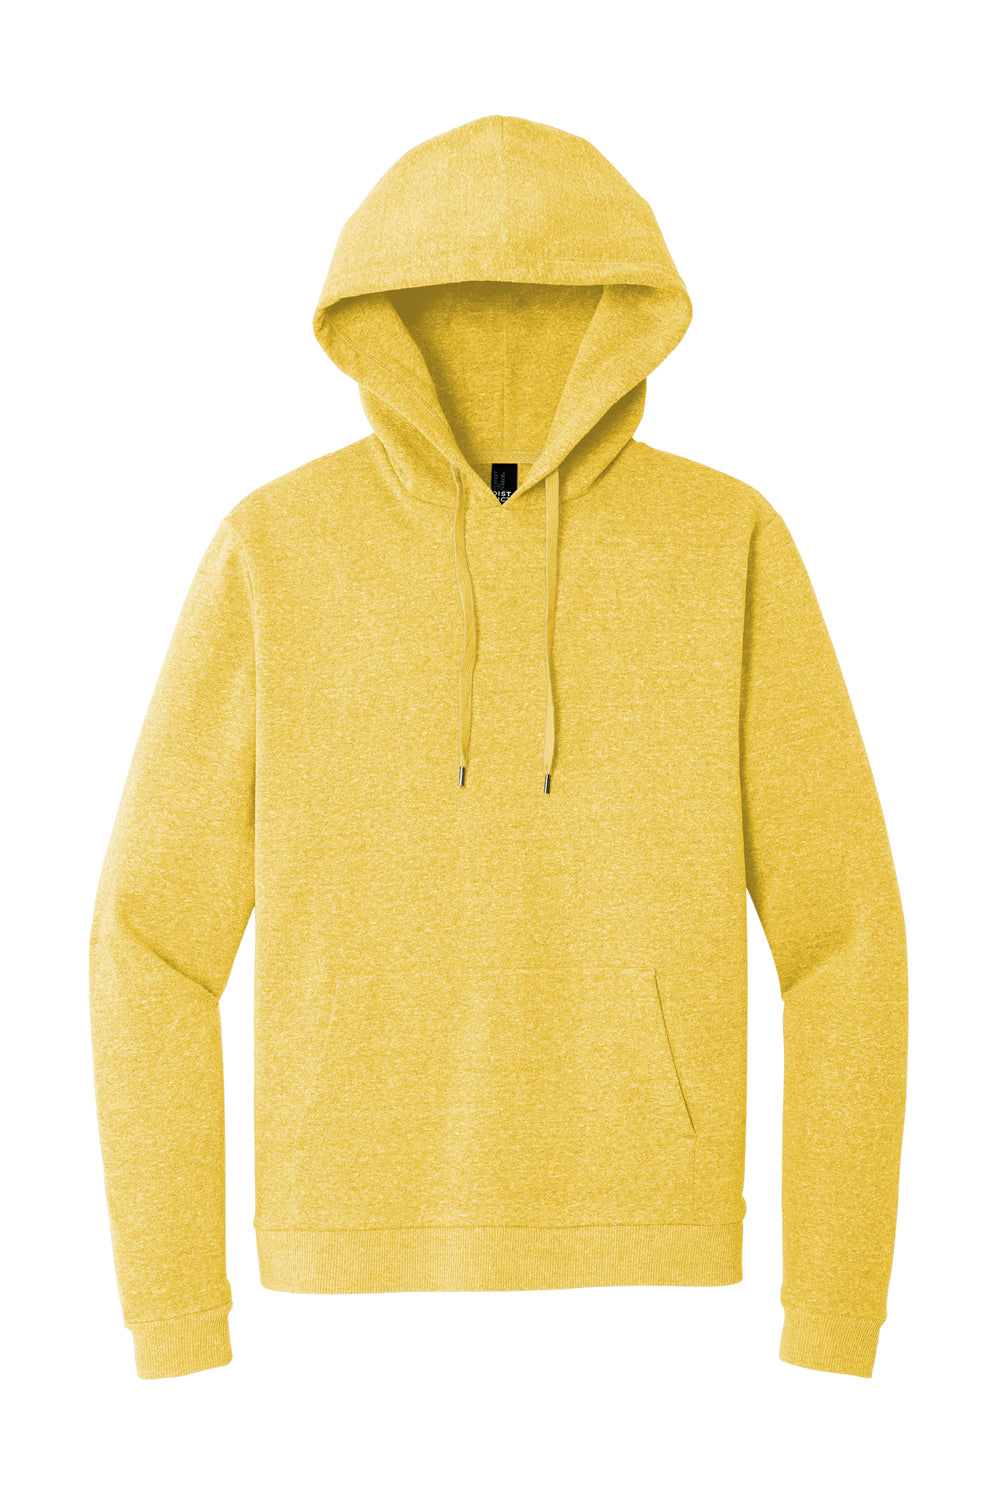 District DT1300 Mens Perfect Tri Fleece Hooded Sweatshirt Hoodie Heather Ochre Yellow Flat Front